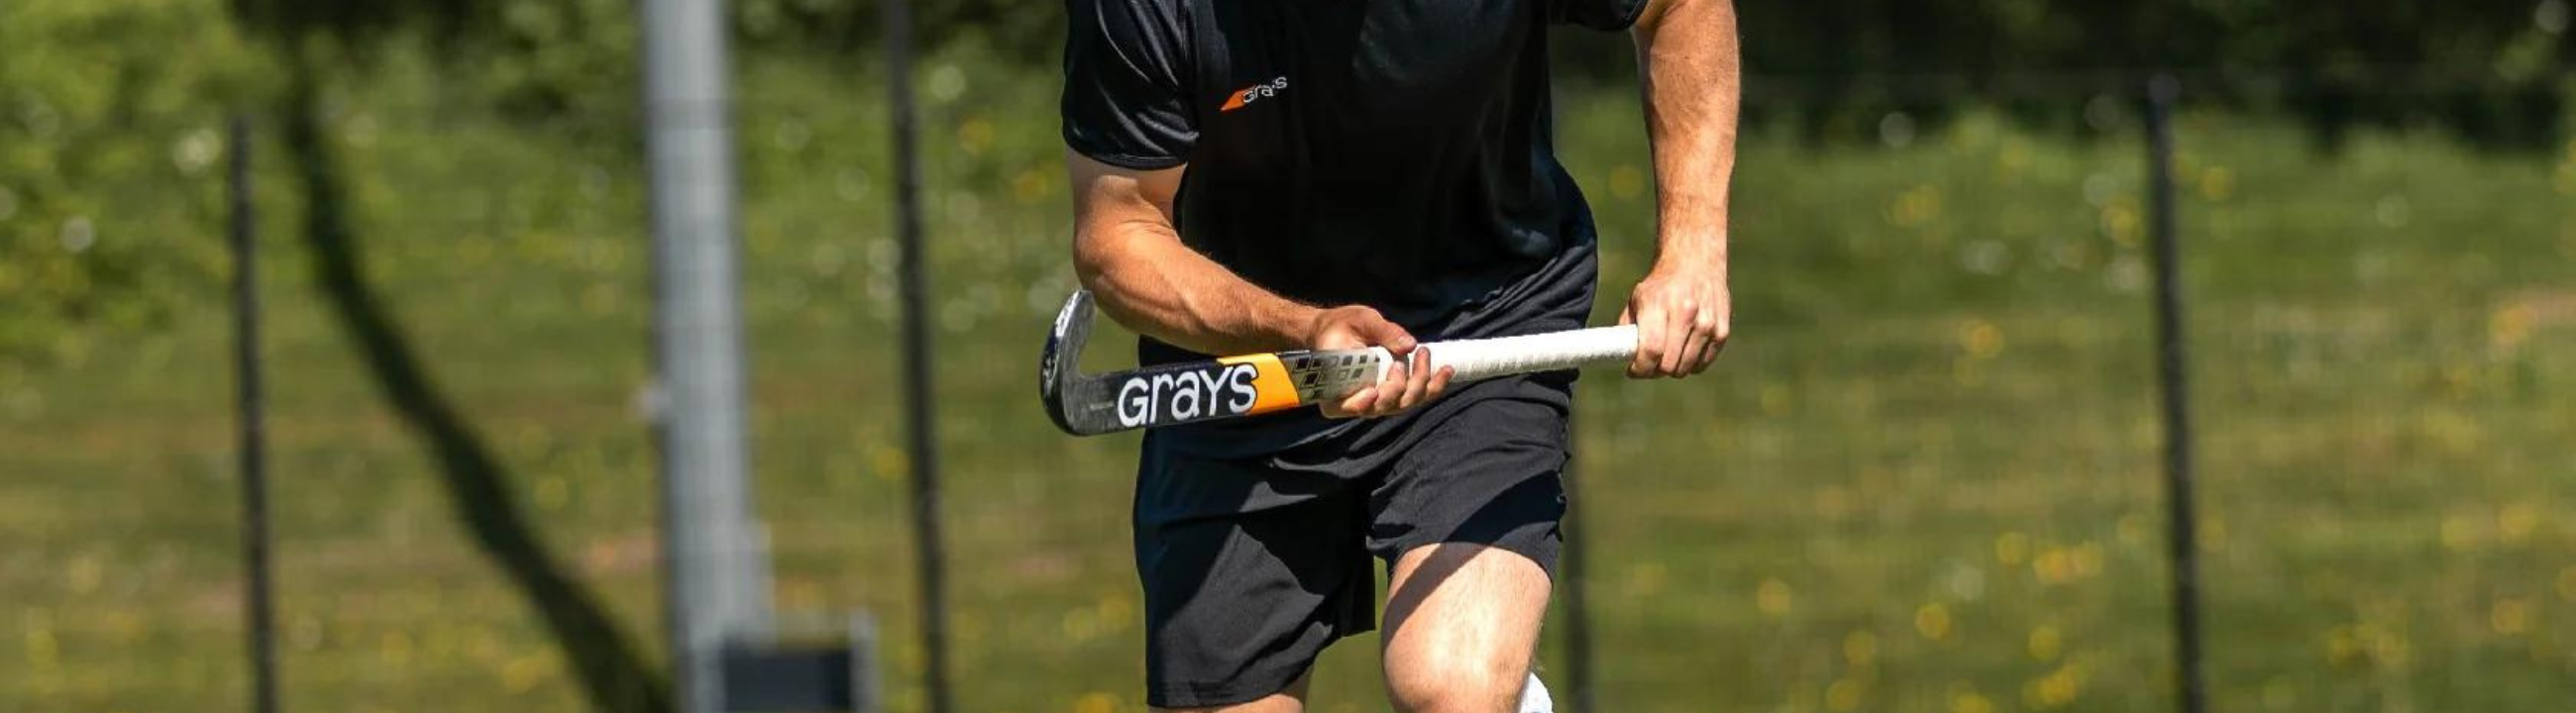 Grays Goalkeeping Hockey Sticks